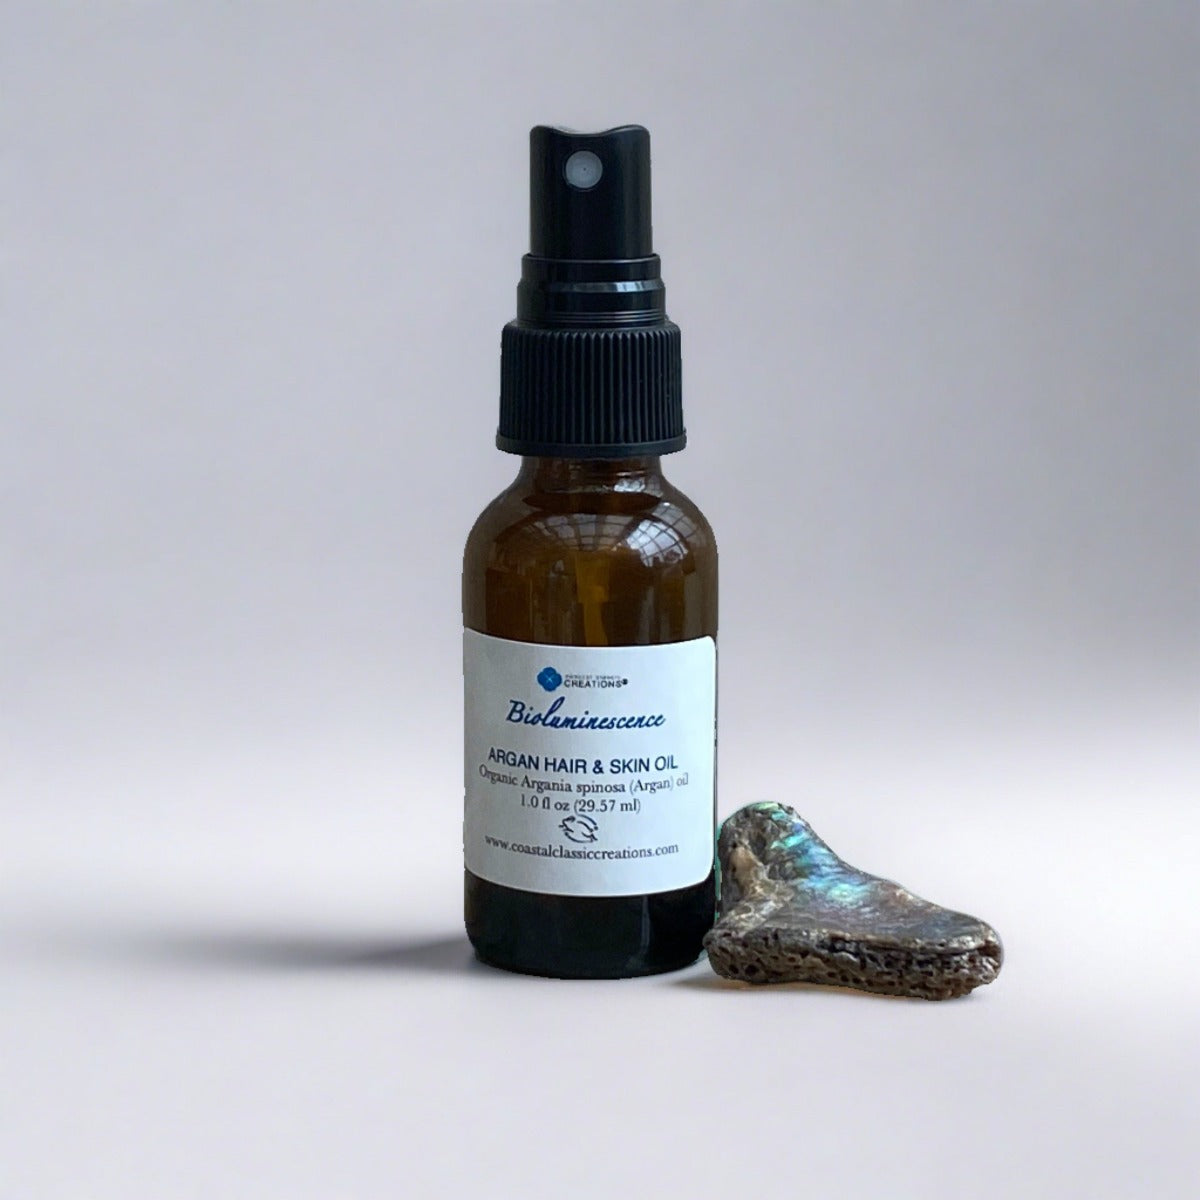 A bottle of bioluminescence Argan Hair & Skin Oil bottle with a spray top,